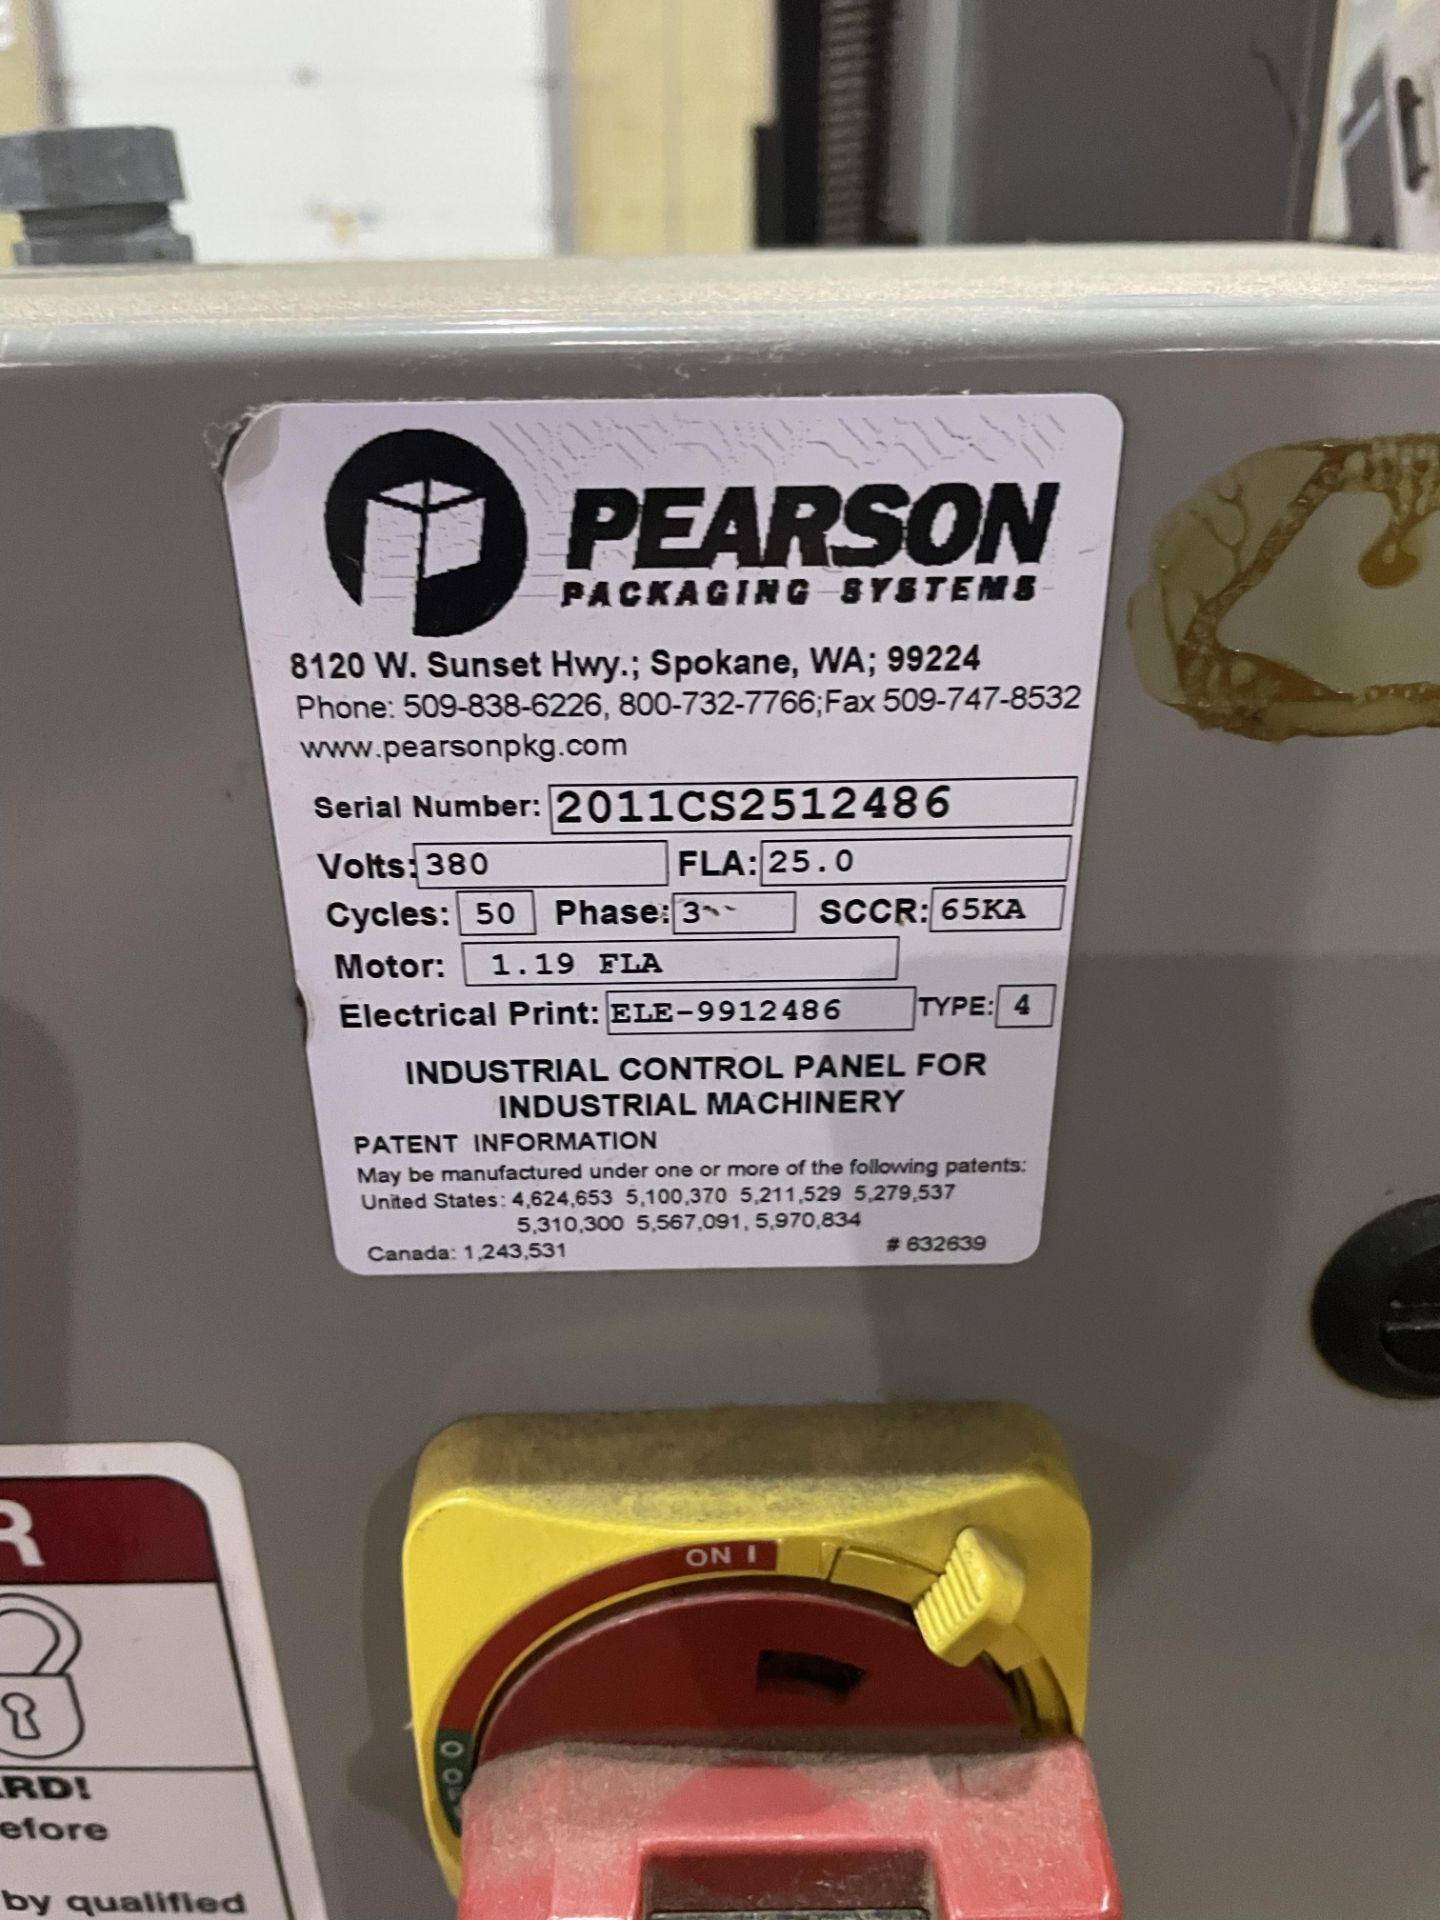 PEARSON CARTON SEALER SN 2011CS2512486 WITH NORDSON GLUE POT RIGGING/LOADING FEE - $175 - Image 5 of 6